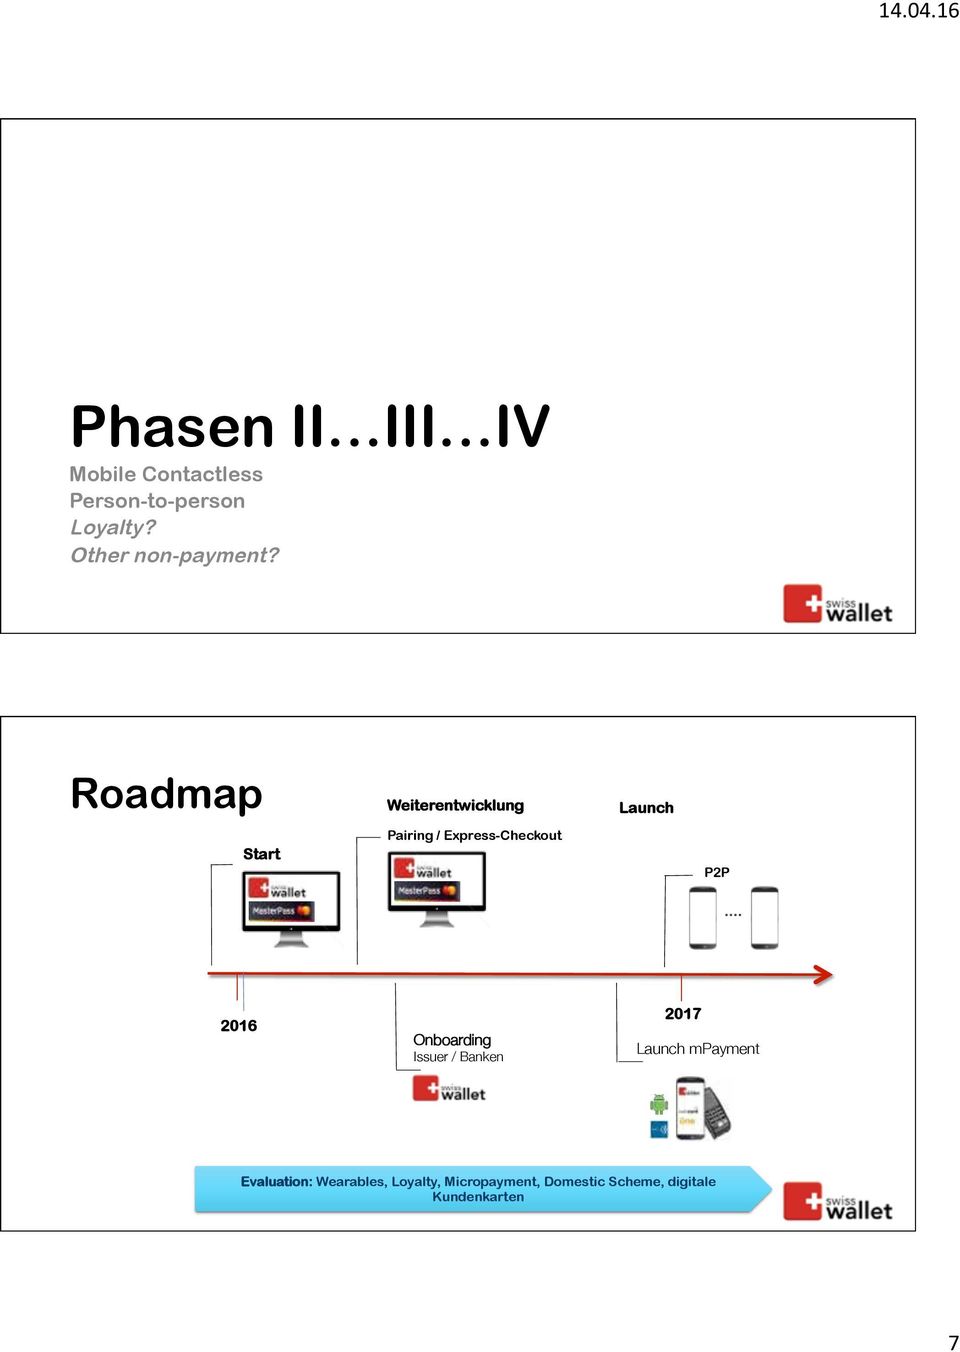 Roadmap Start Weiterentwicklung Pairing / Express-Checkout Launch P2P.